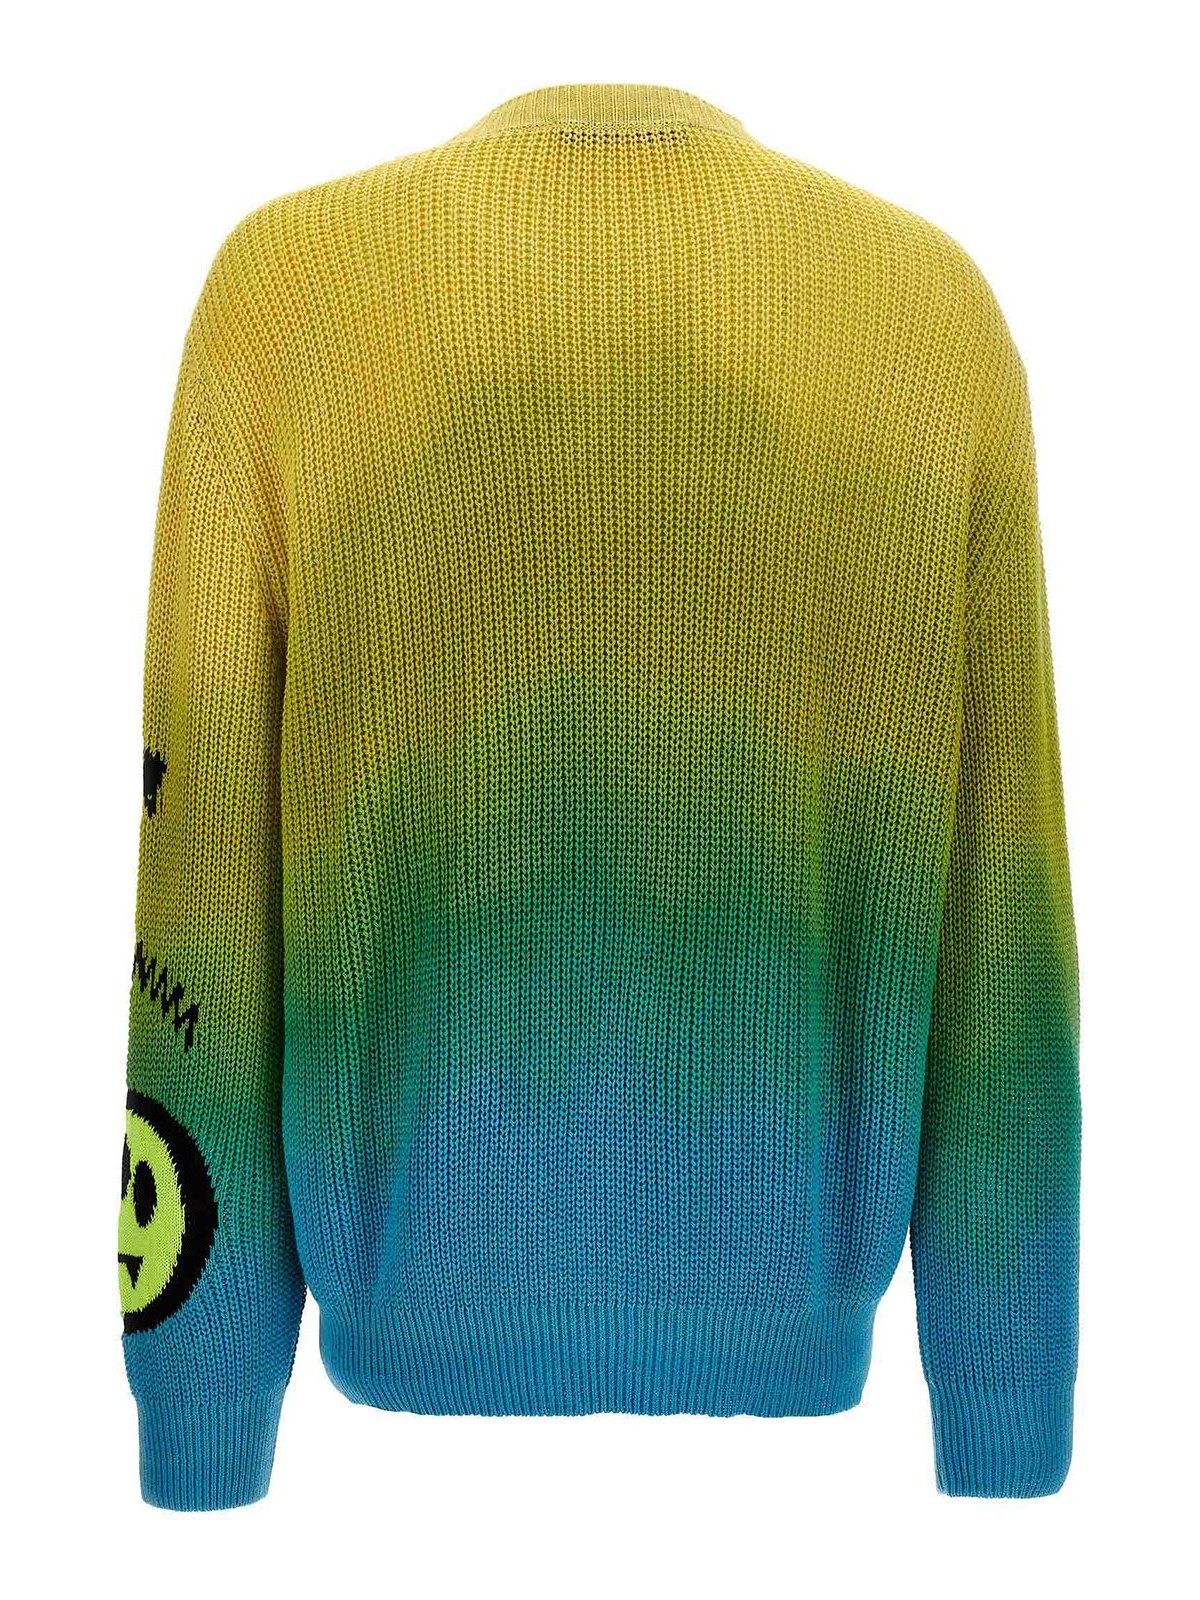 Shop Barrow Jacquard Logo Sweater In Multicolour